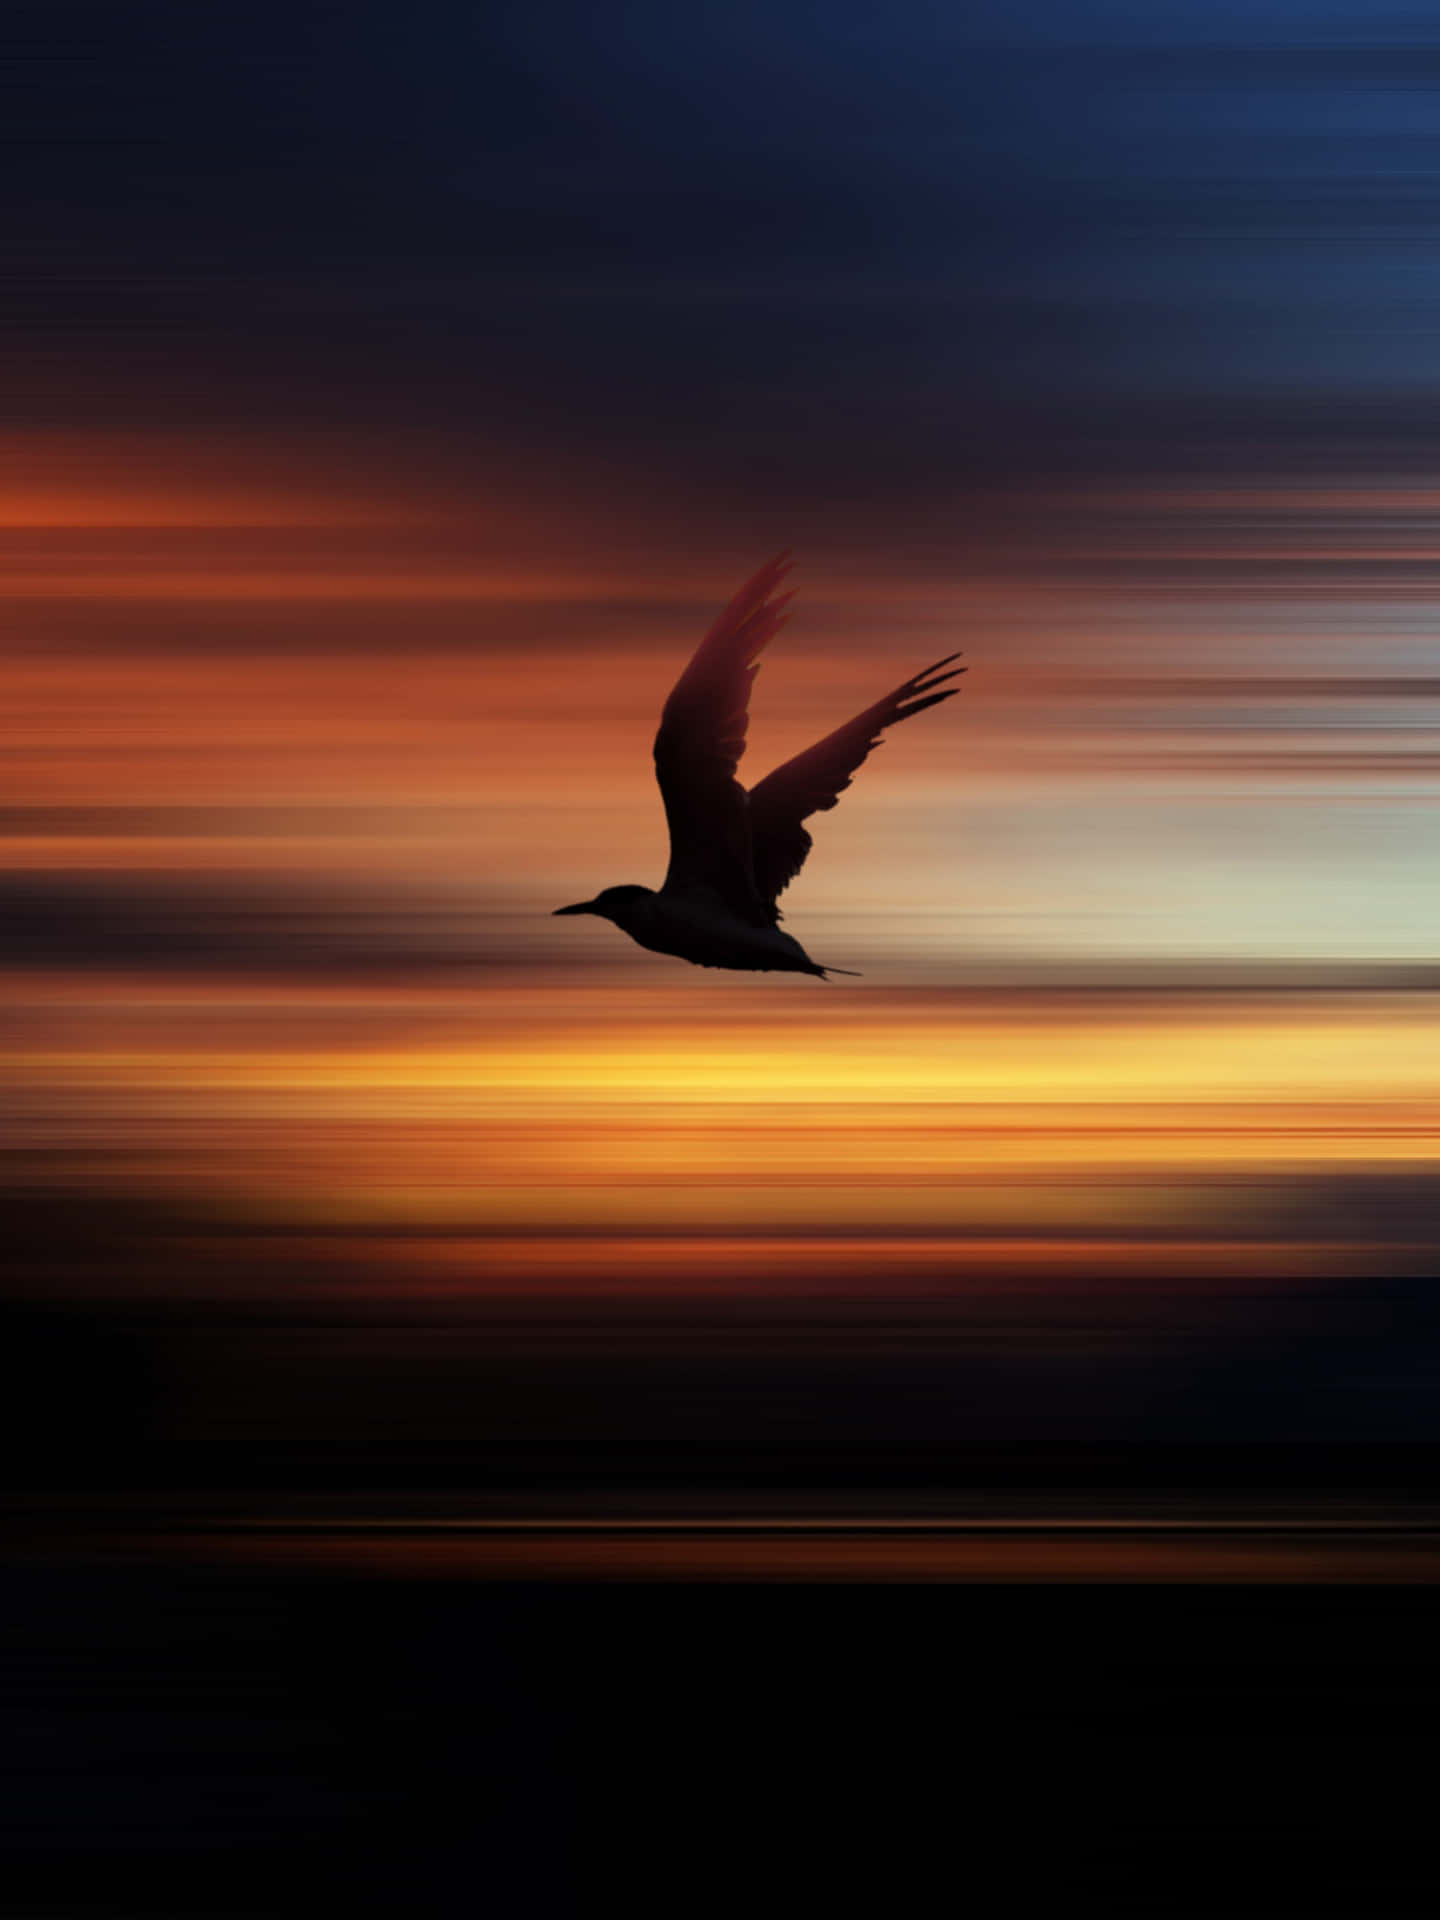 Flying Bird And Scenic Sunset Sky Wallpaper